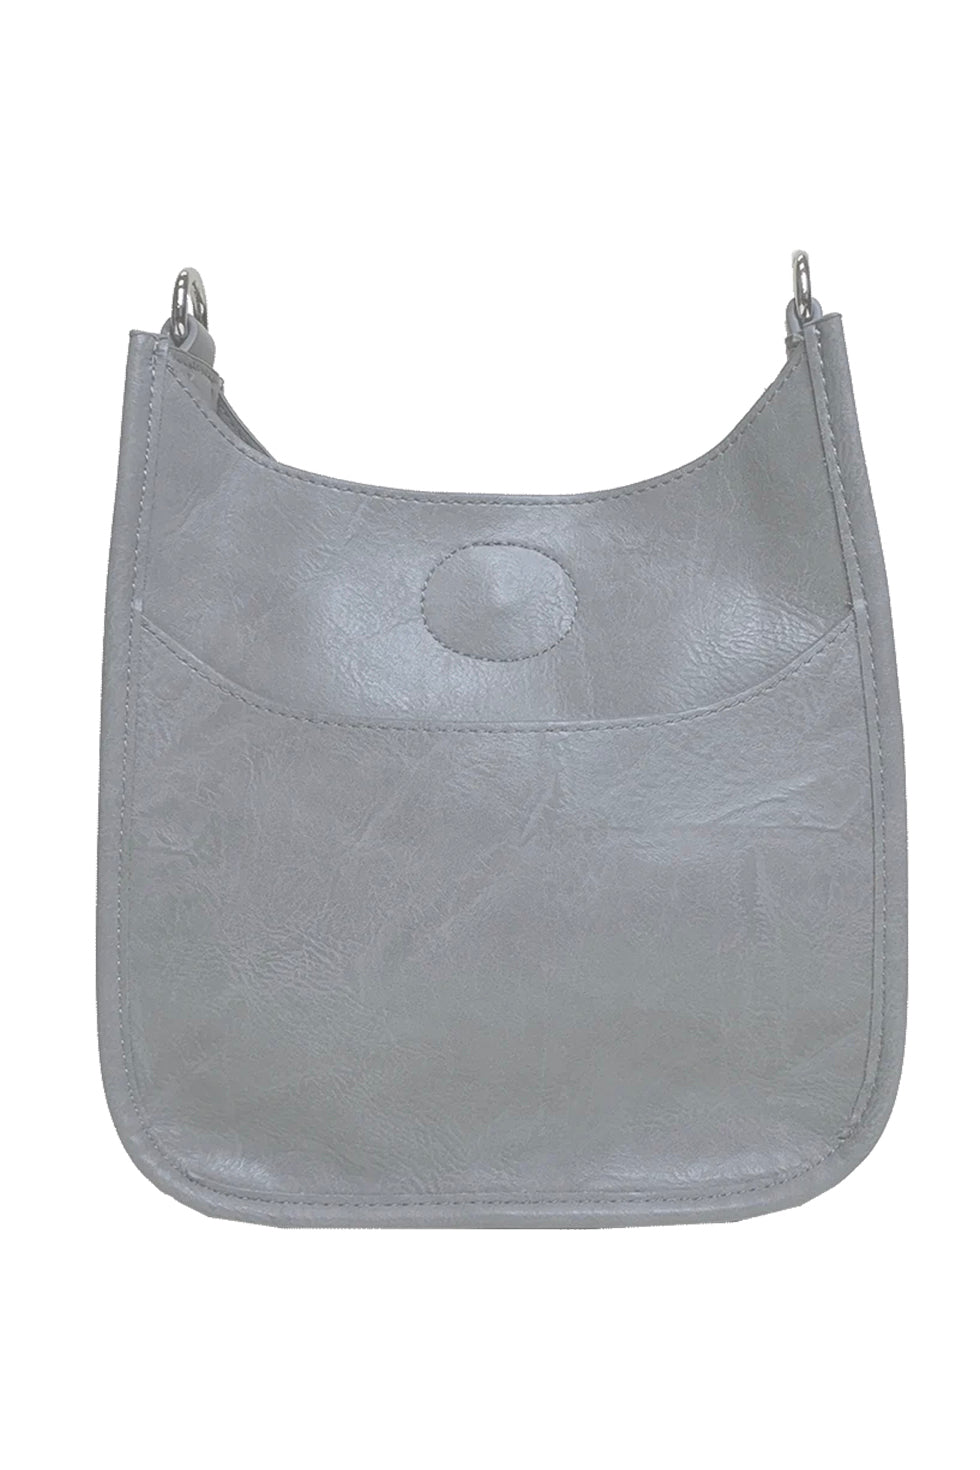 Ahdorned Grey Vegan Leather Crossbody Messenger Bag